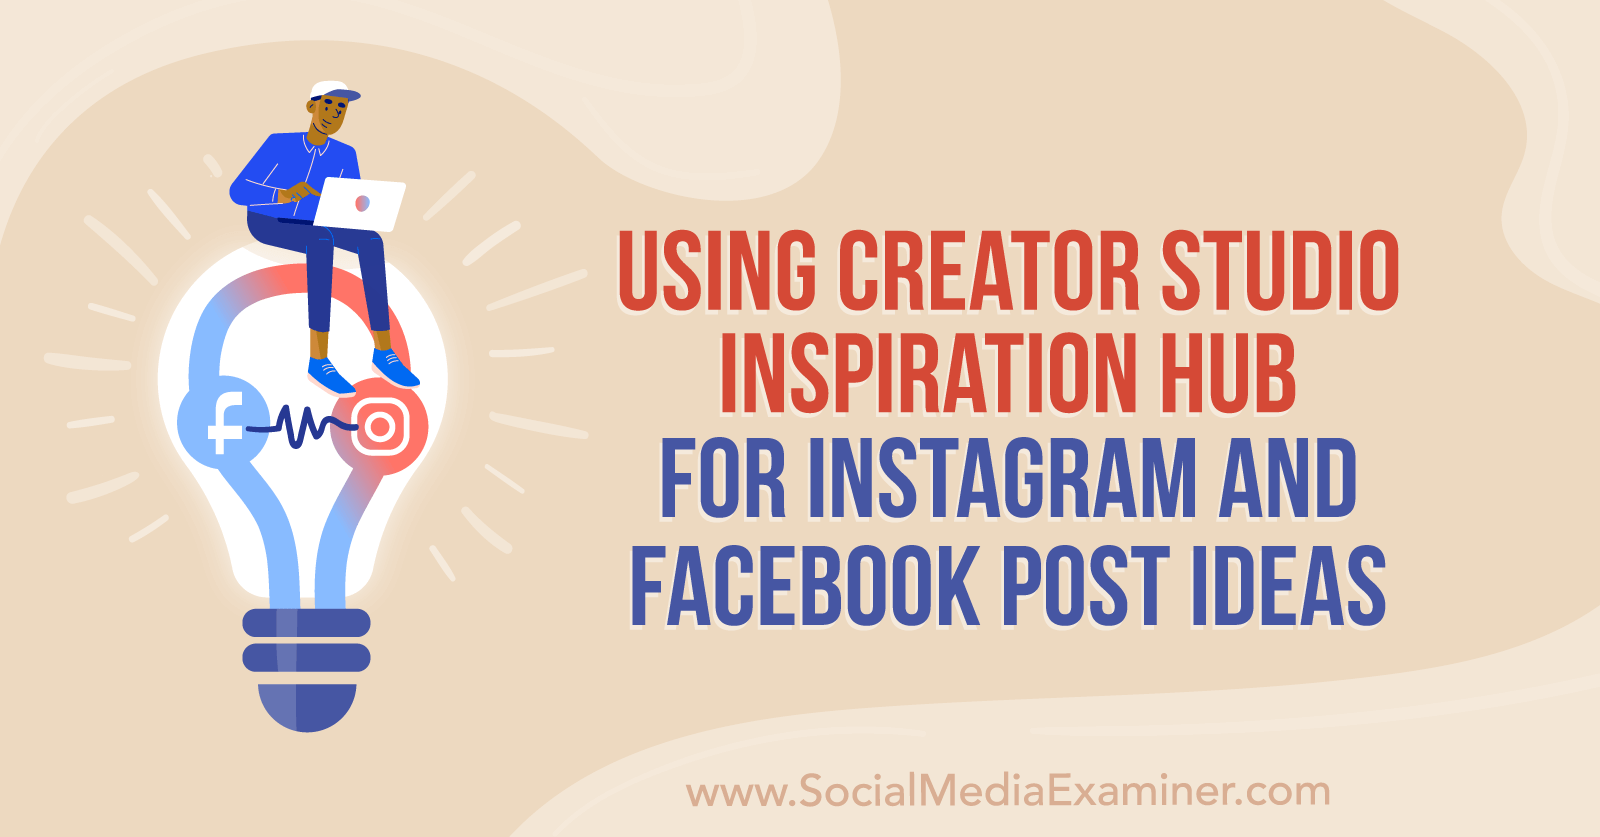 Using Creator Studio Inspiration Hub for Instagram and Facebook Post Ideas by Anna Sonnenberg on Social Media Examiner.